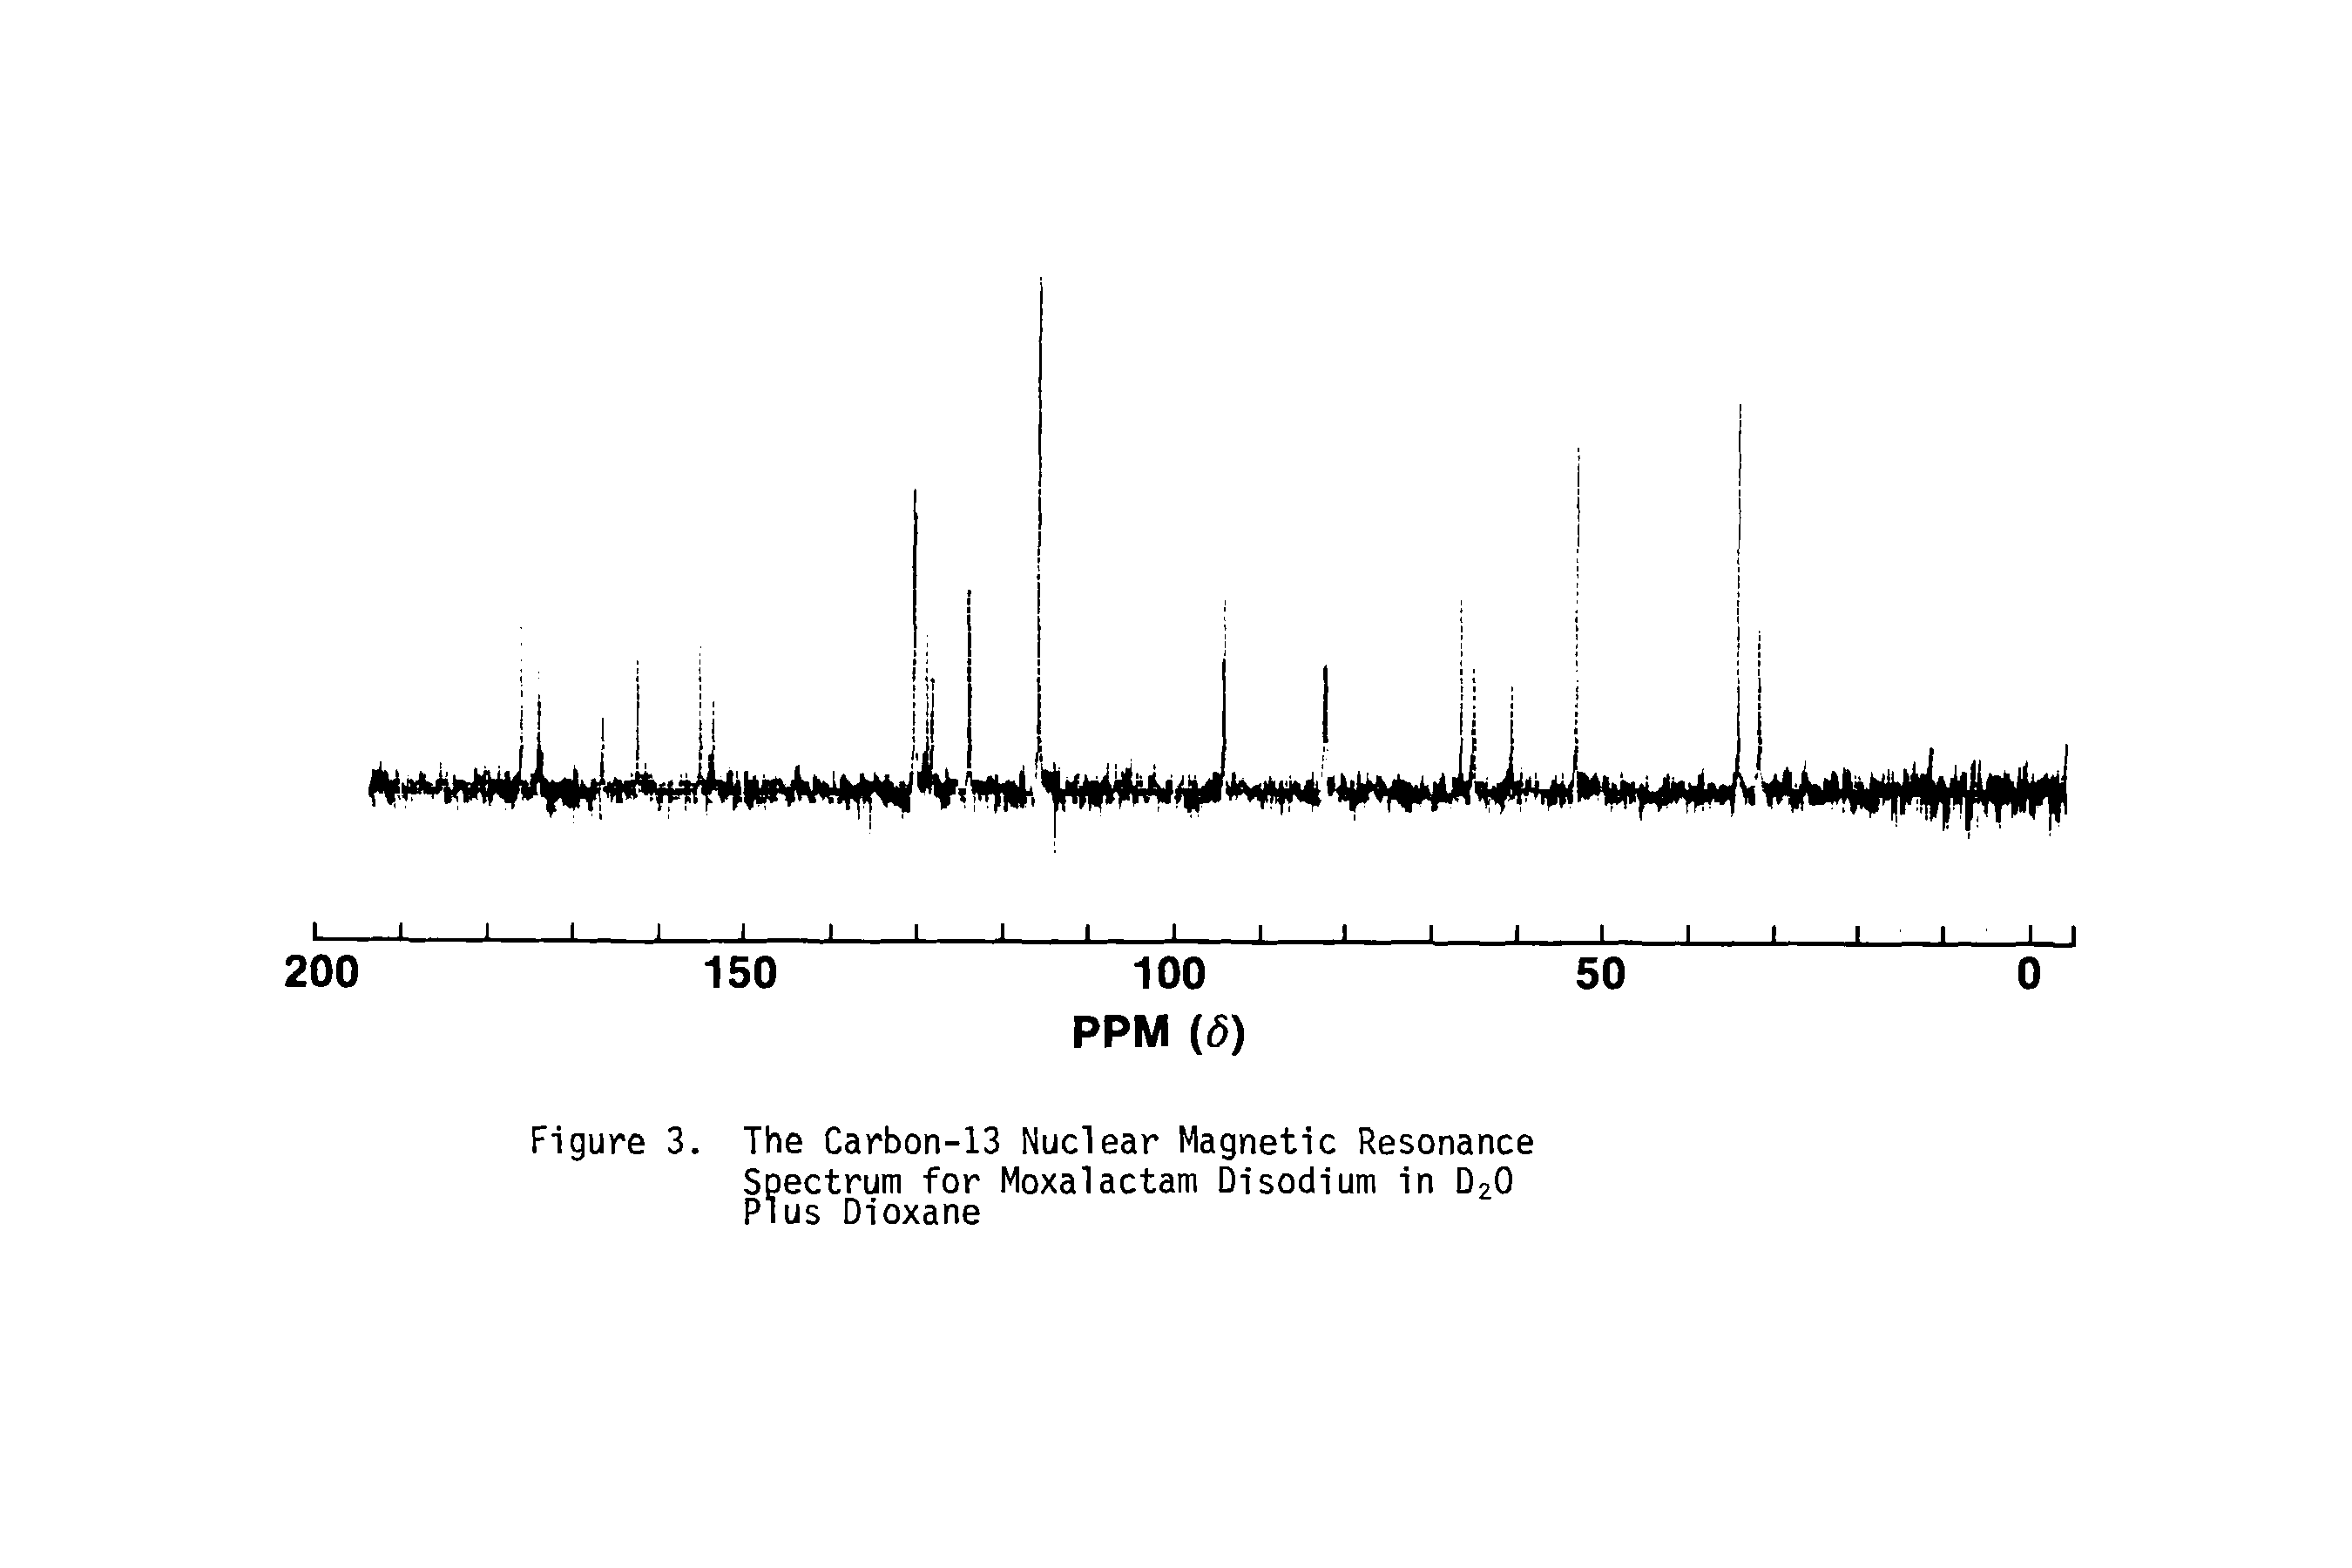 Figure 3. The Carbon-13 Nuclear Magnetic Resonance Spectrum for Moxalactam Disodium in D20 Plus Dioxane...